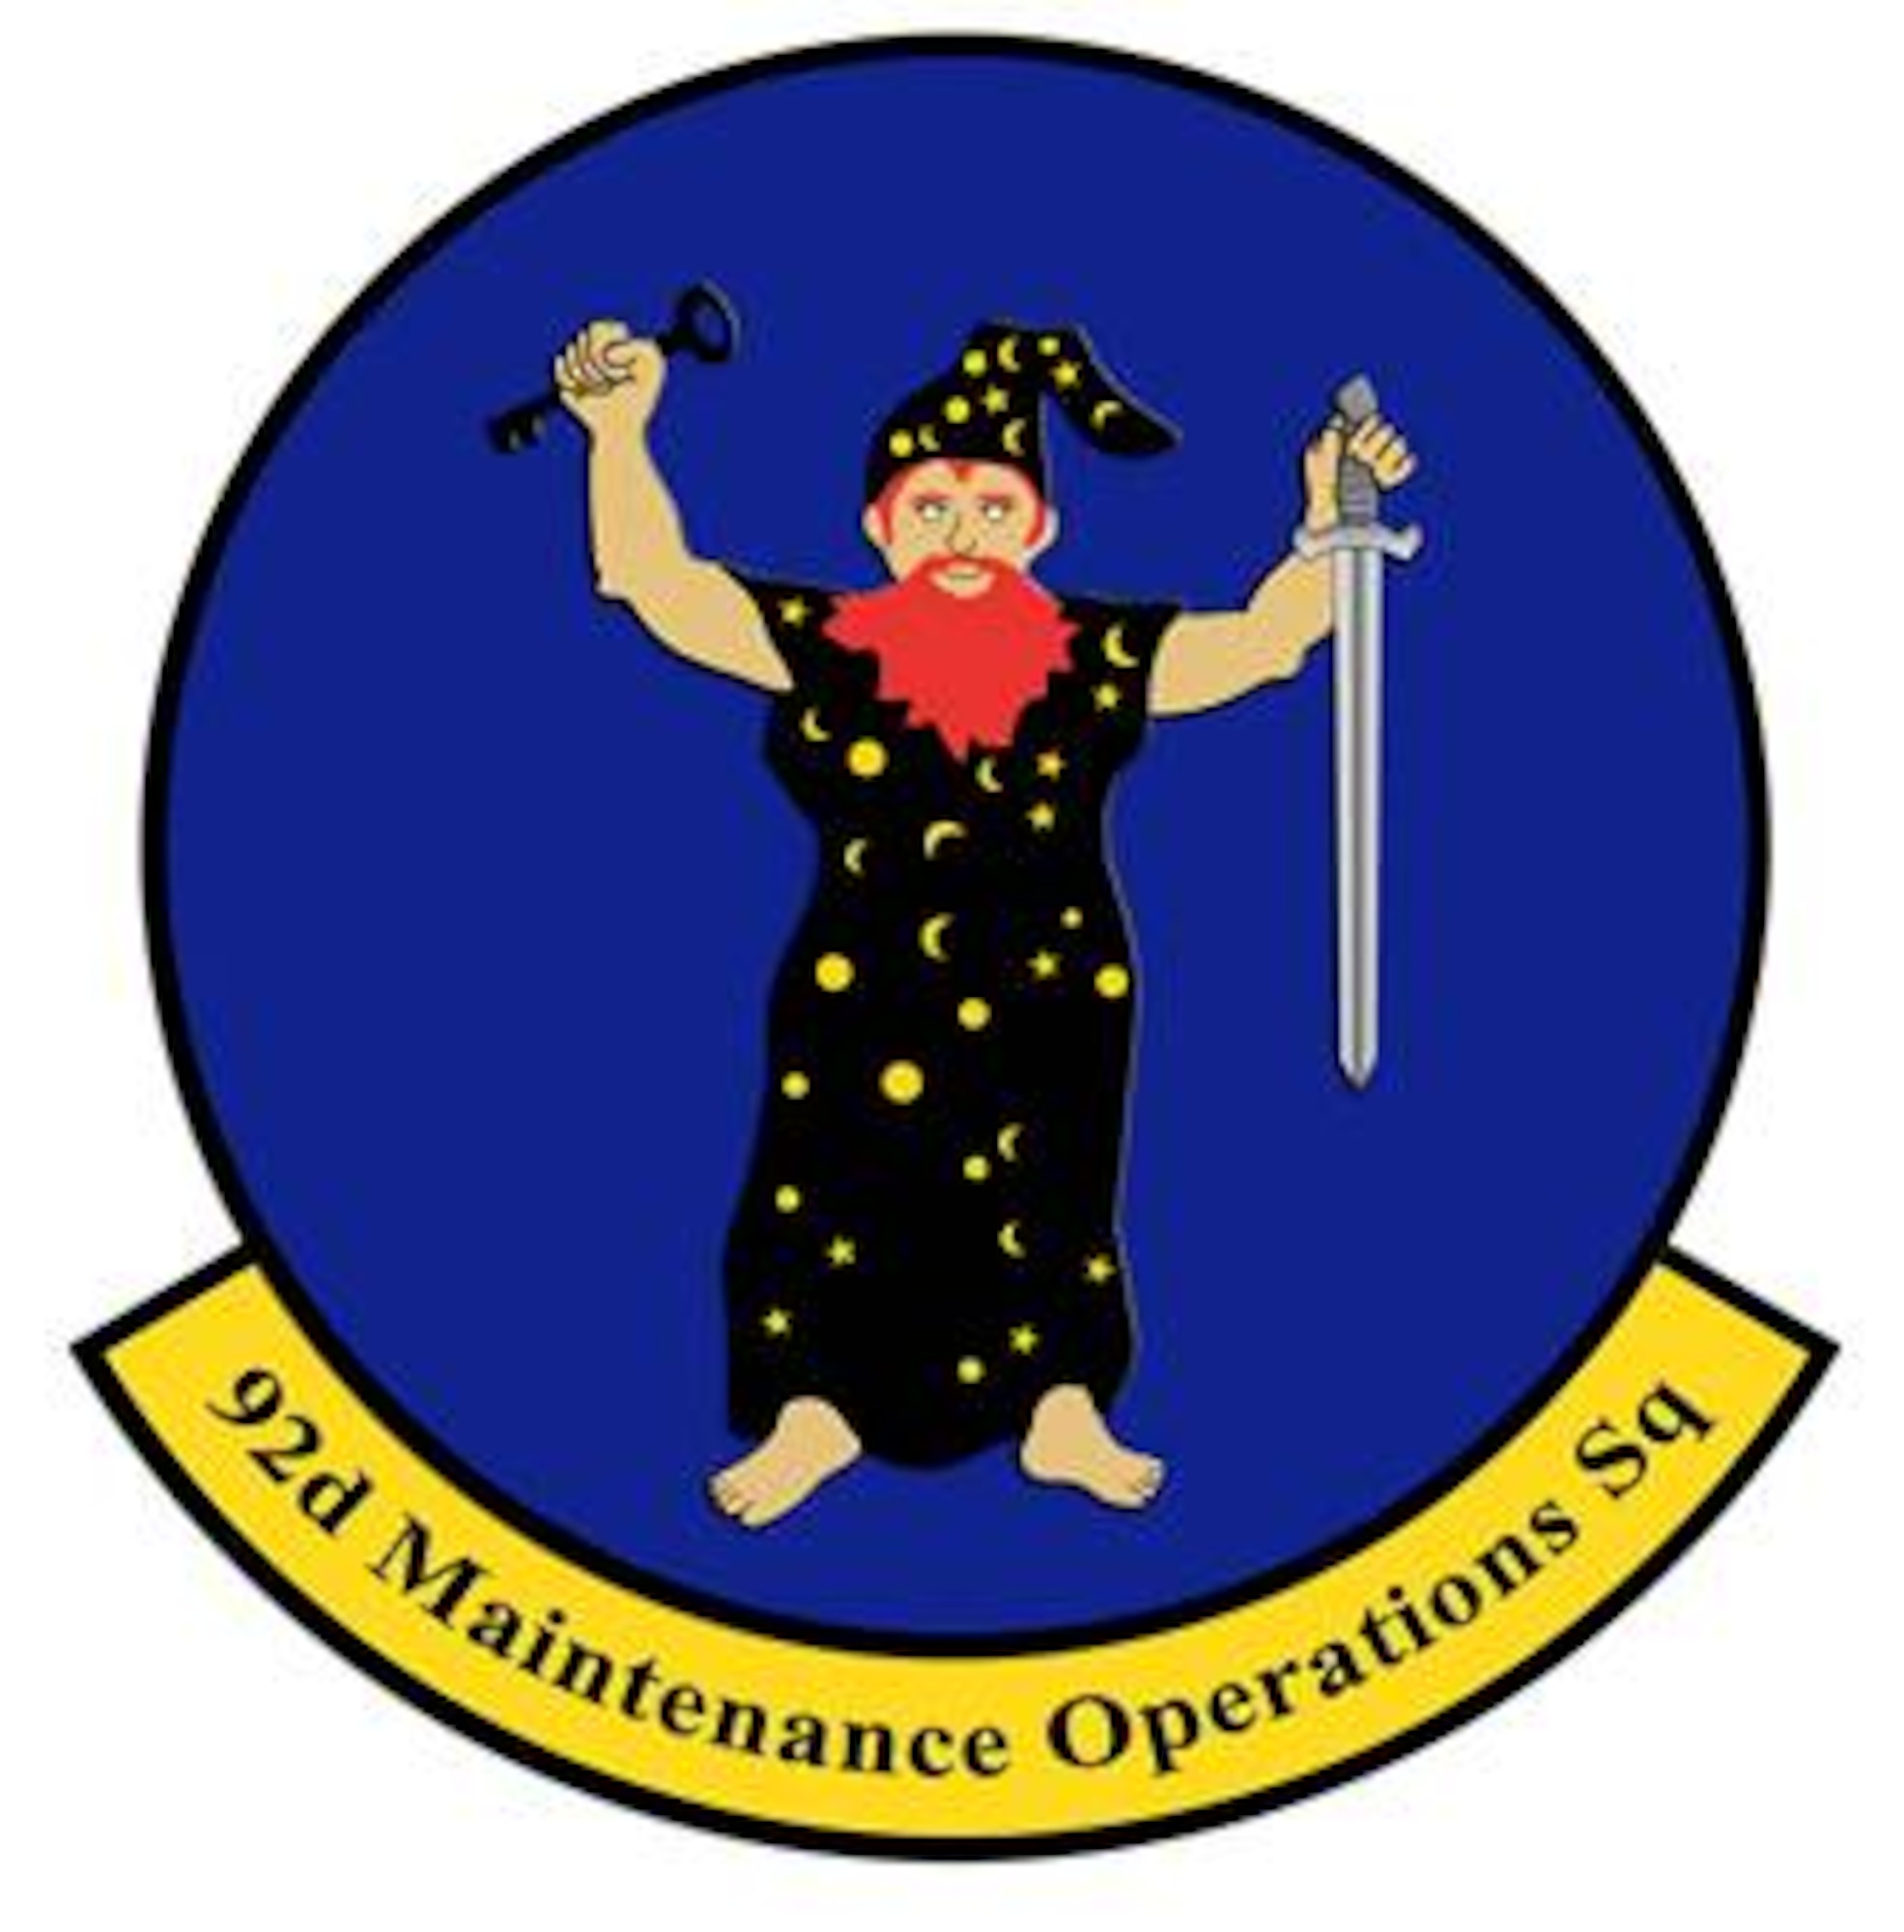 92nd Maintenance Operations Squadron